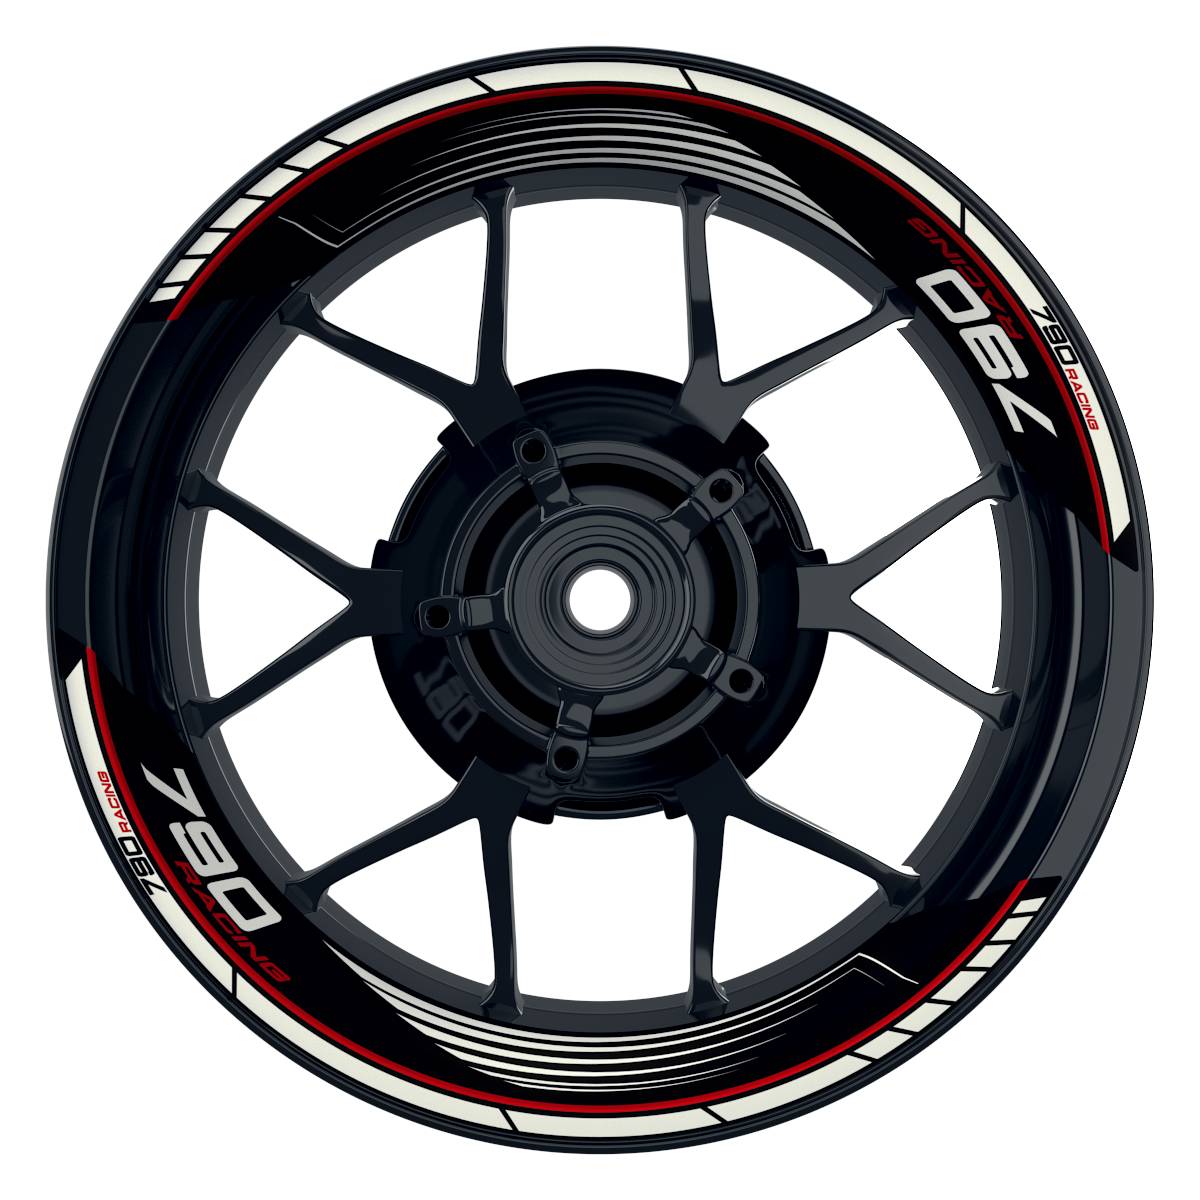 KTM Racing 790 SAW schwarz rot Frontansicht